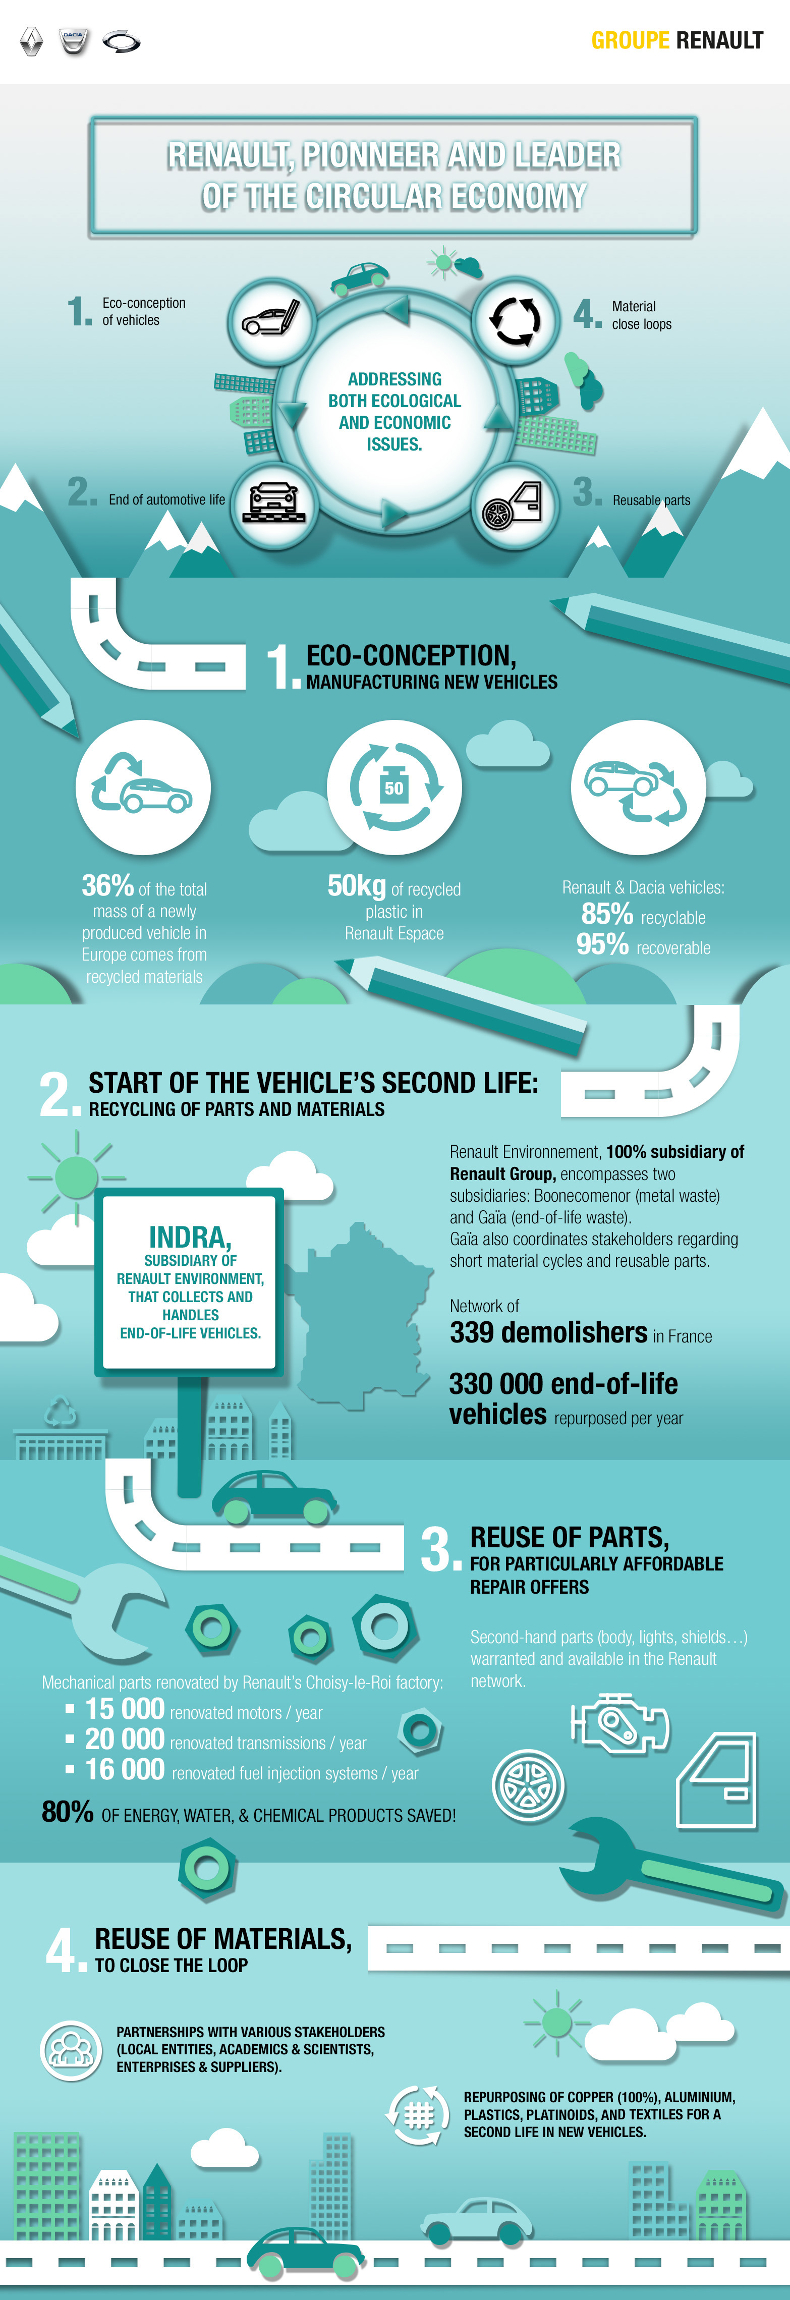 2017 - Renault circular economy vehicles life cycle